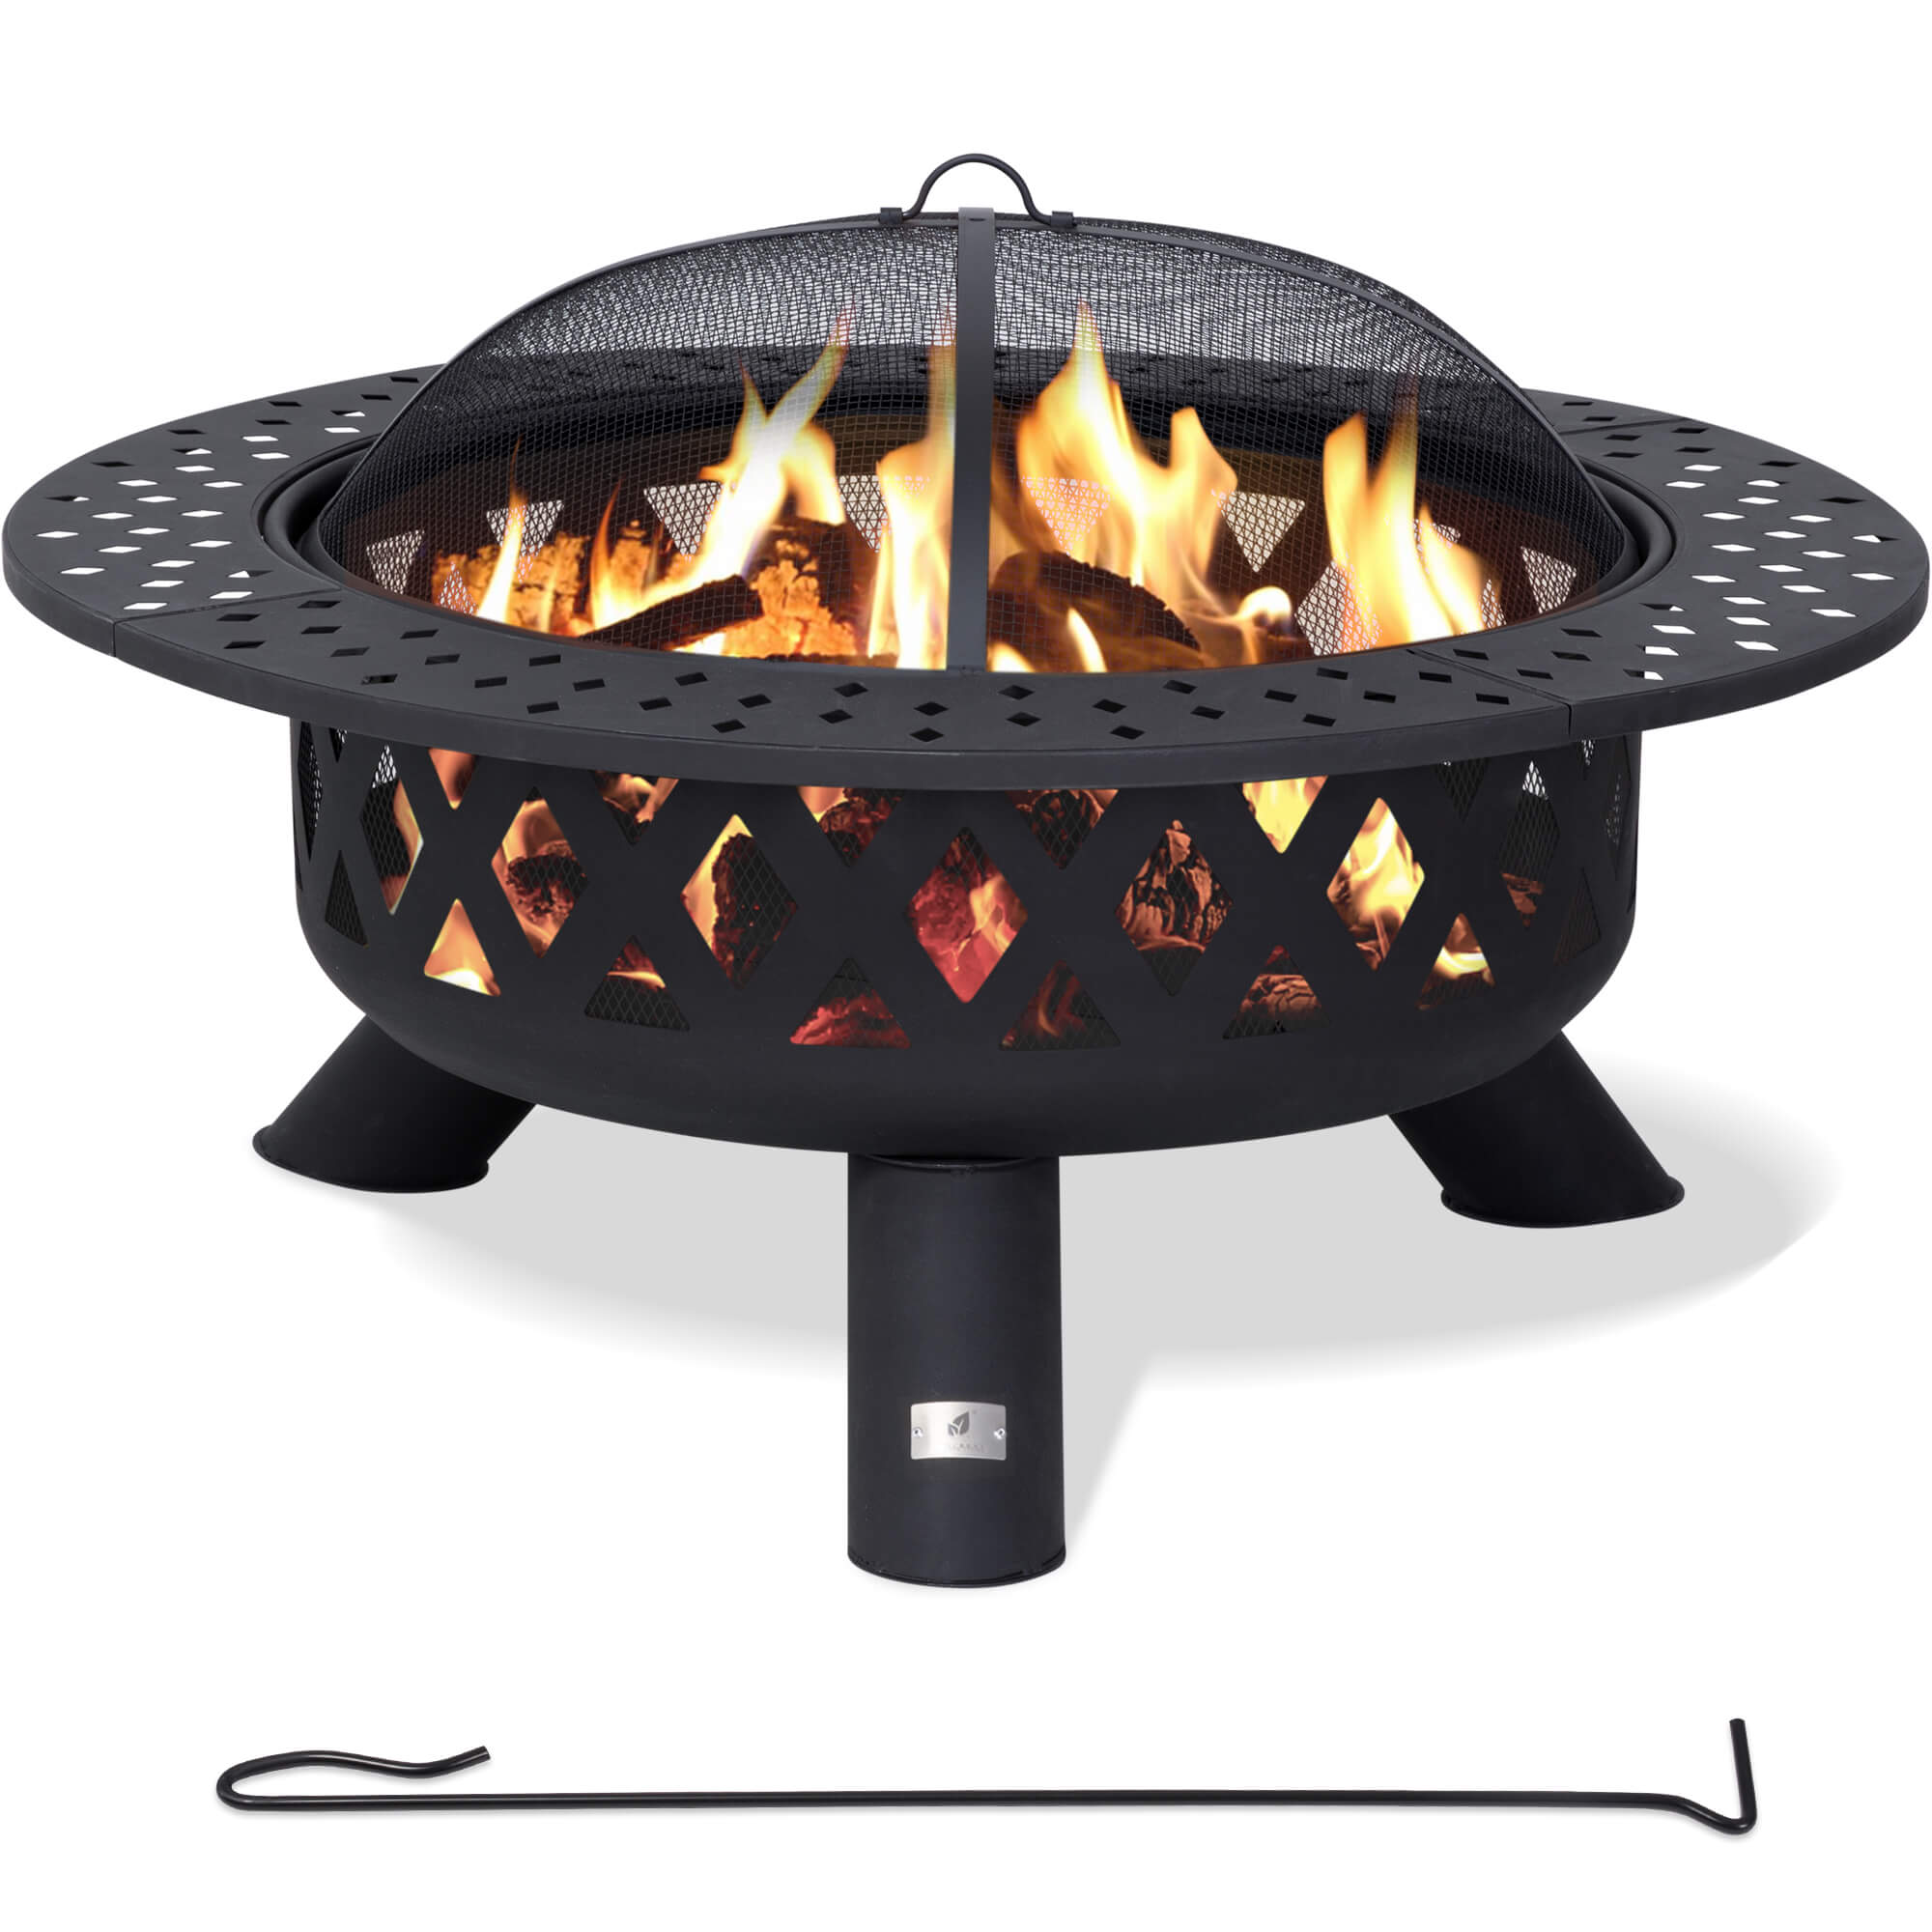 Outdoor-Bonfire-Wood-Burning-Fire-Pit#size_42-inch-rhombus-pattern